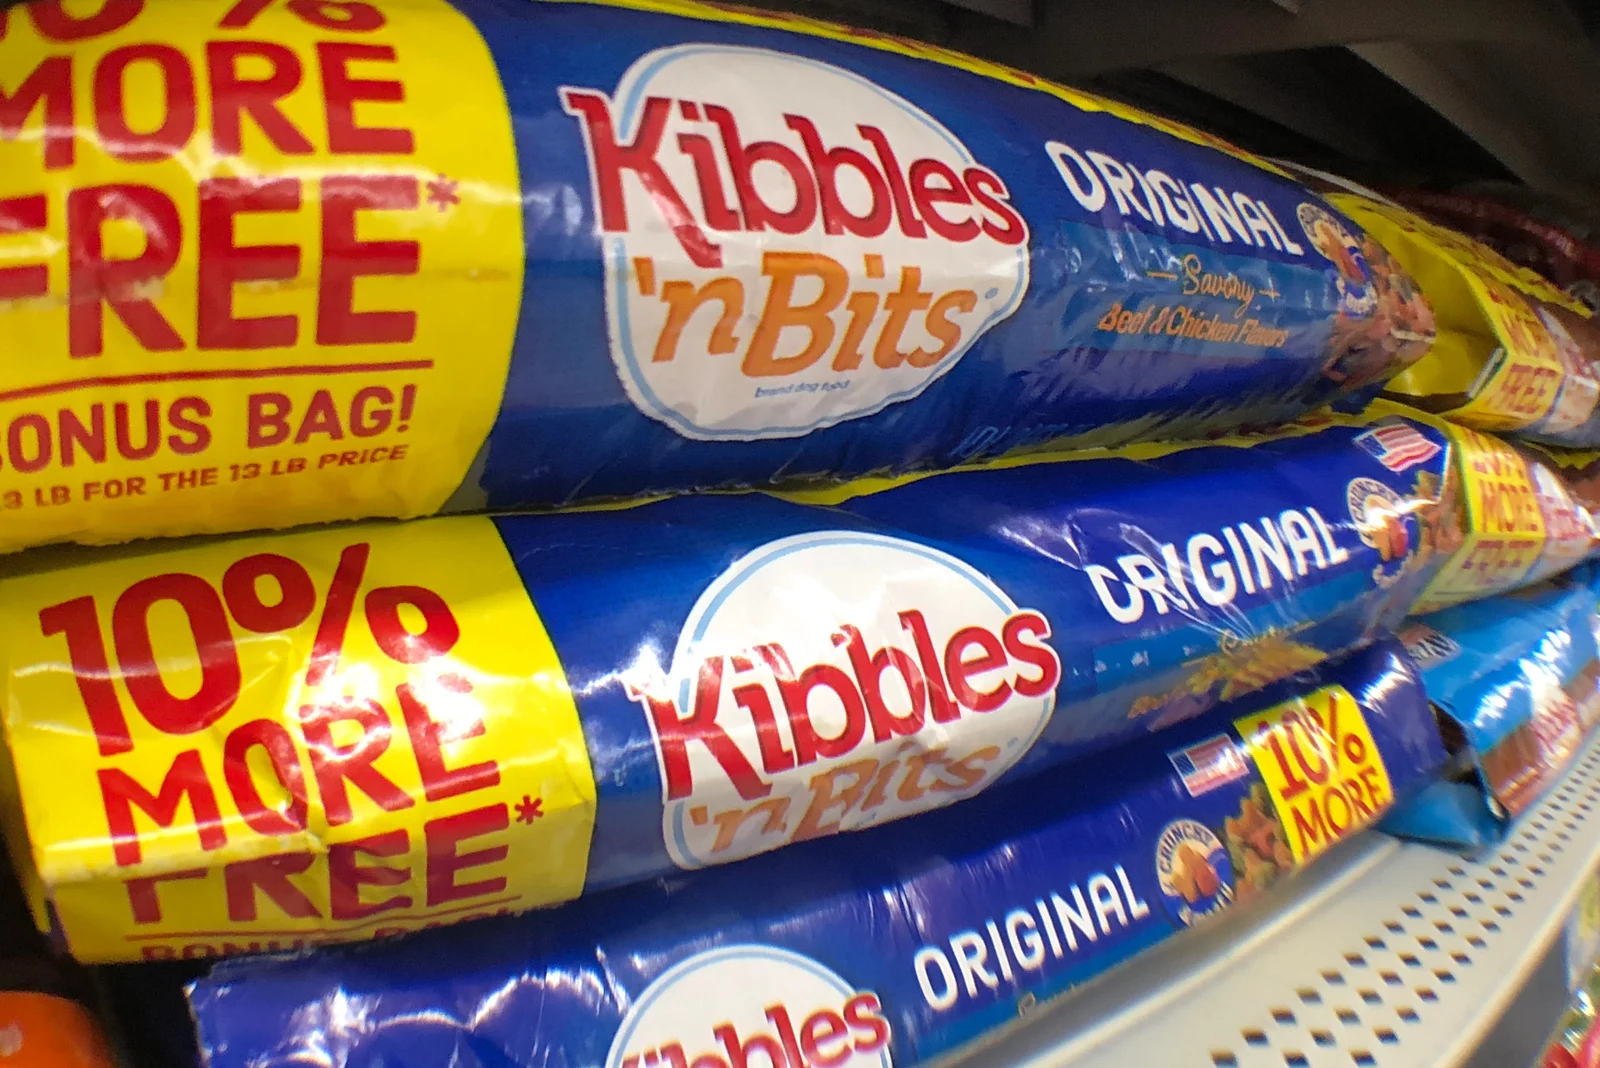 Kibbles 'N Bits dog food